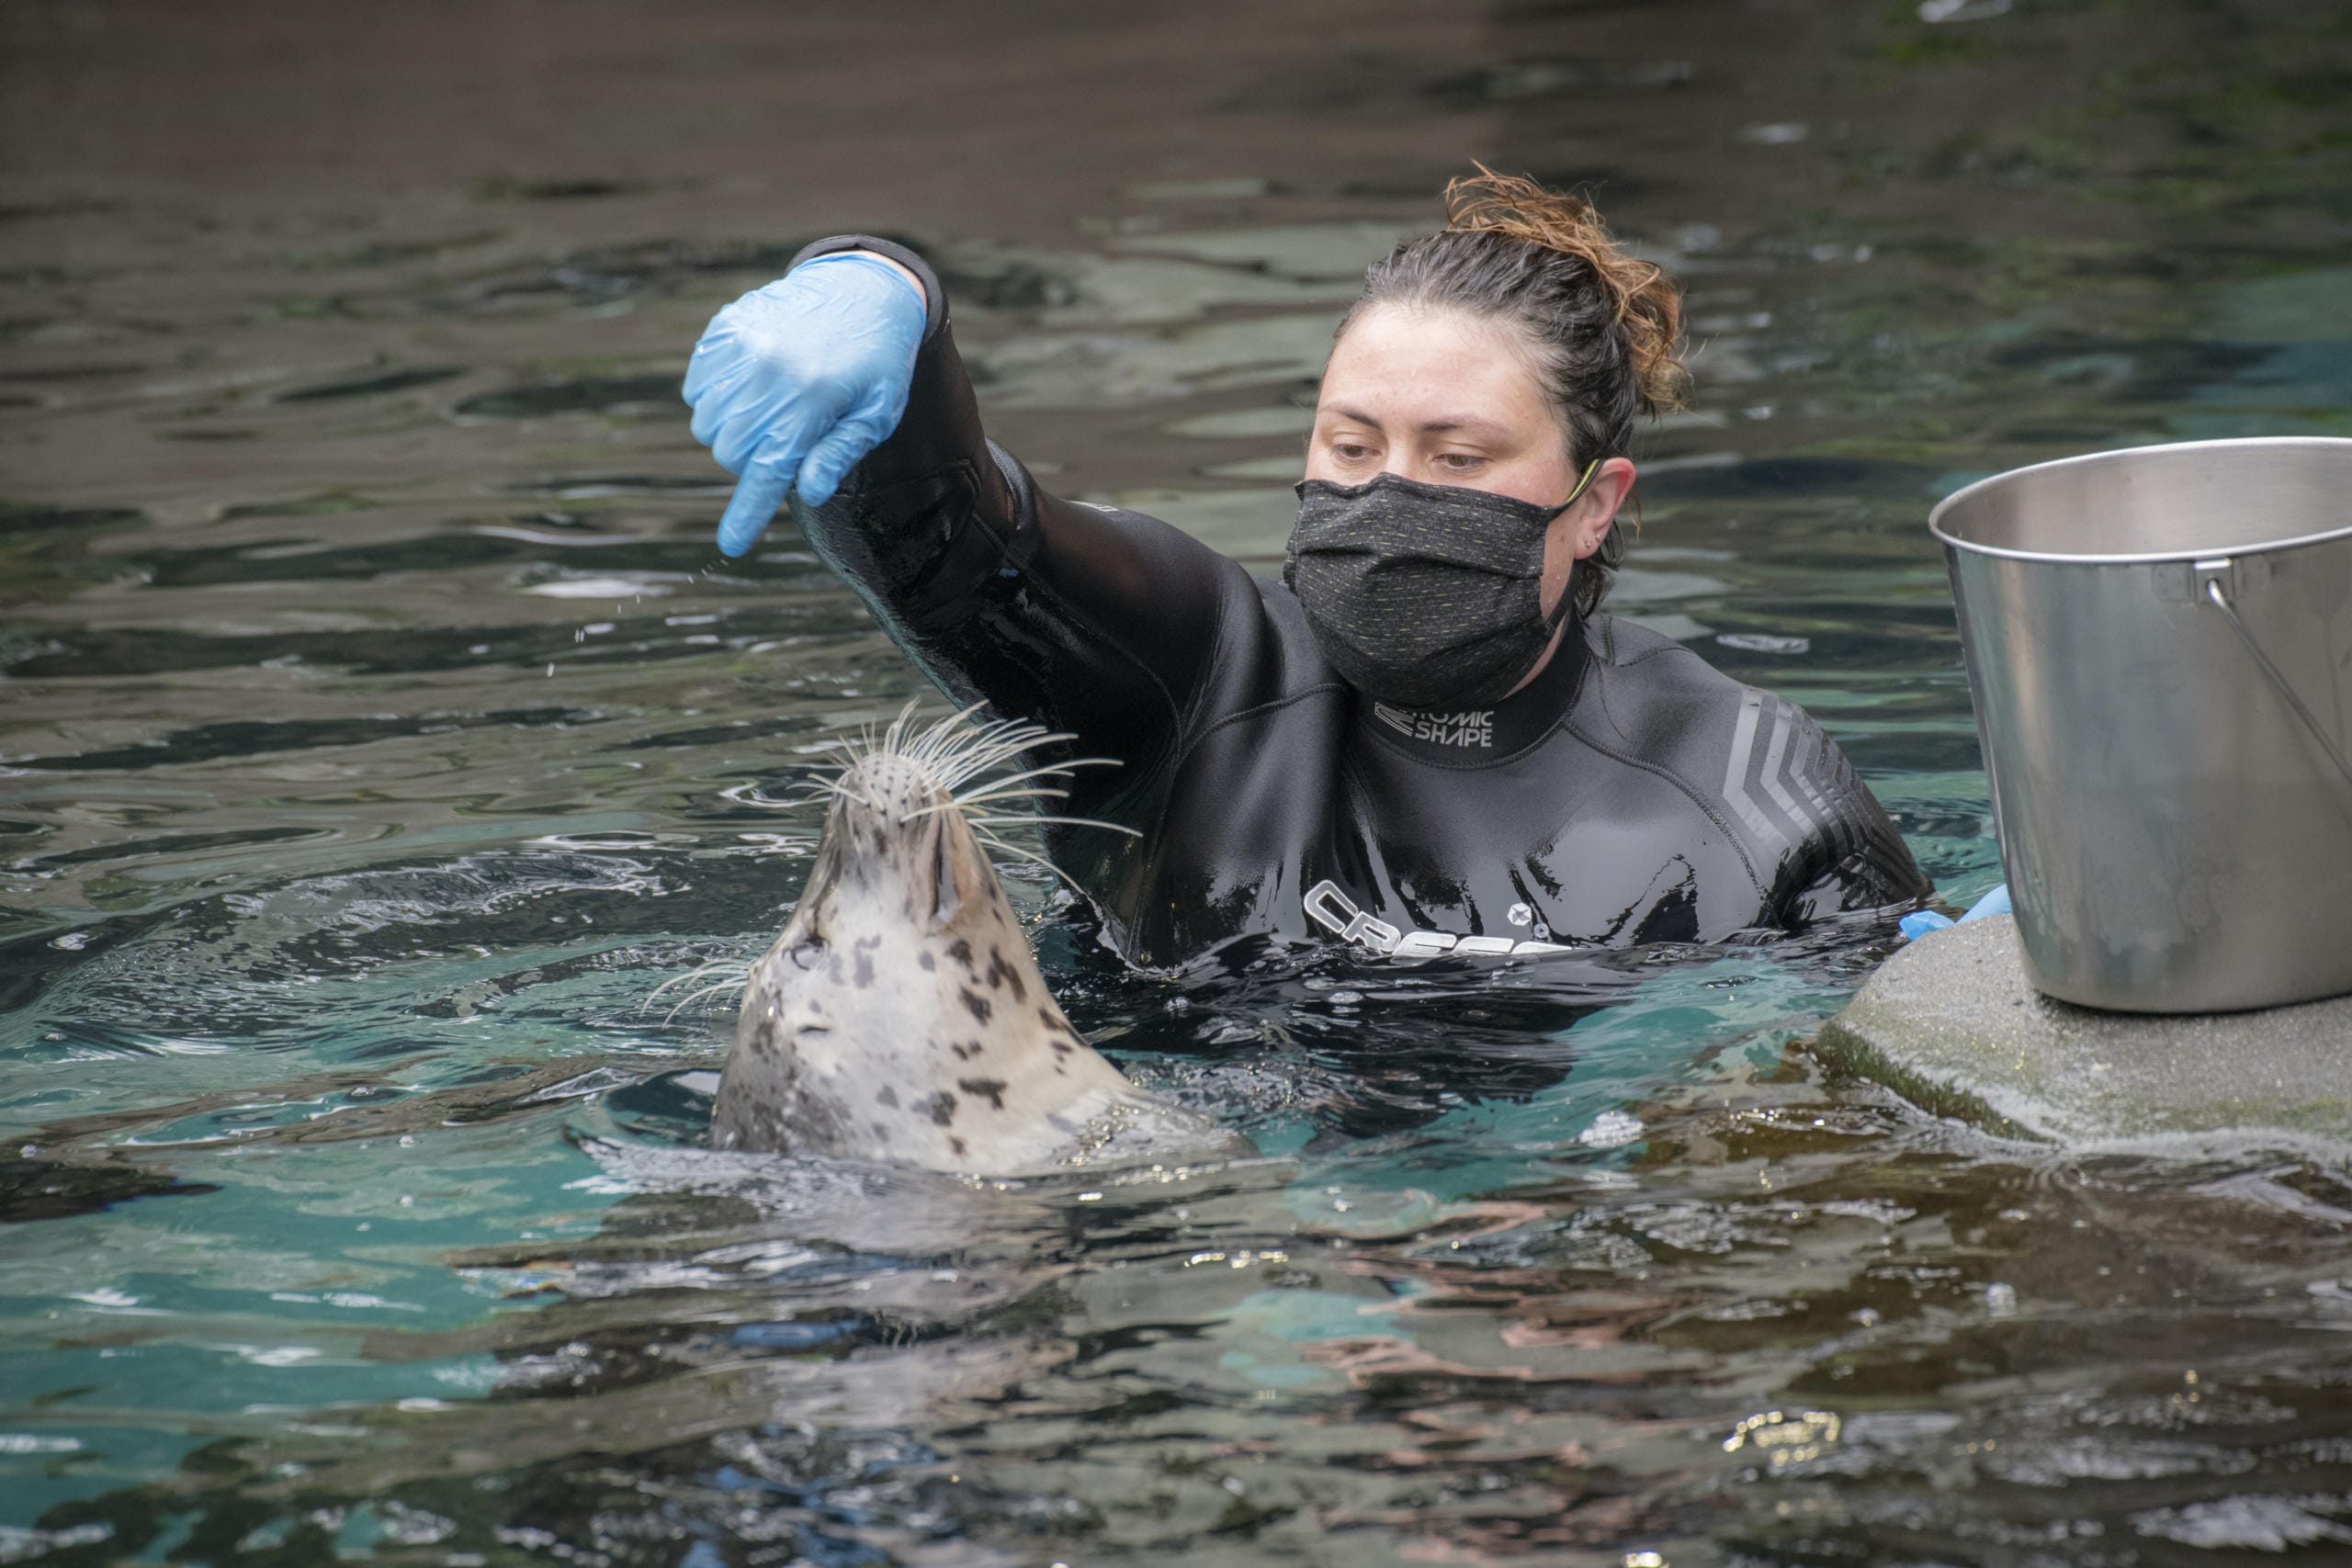 Keeper Sara Morgan with harbor seal Tongass during a training session. Sara is wearing a mask as a precaution during the novel coronavirus pandemic.